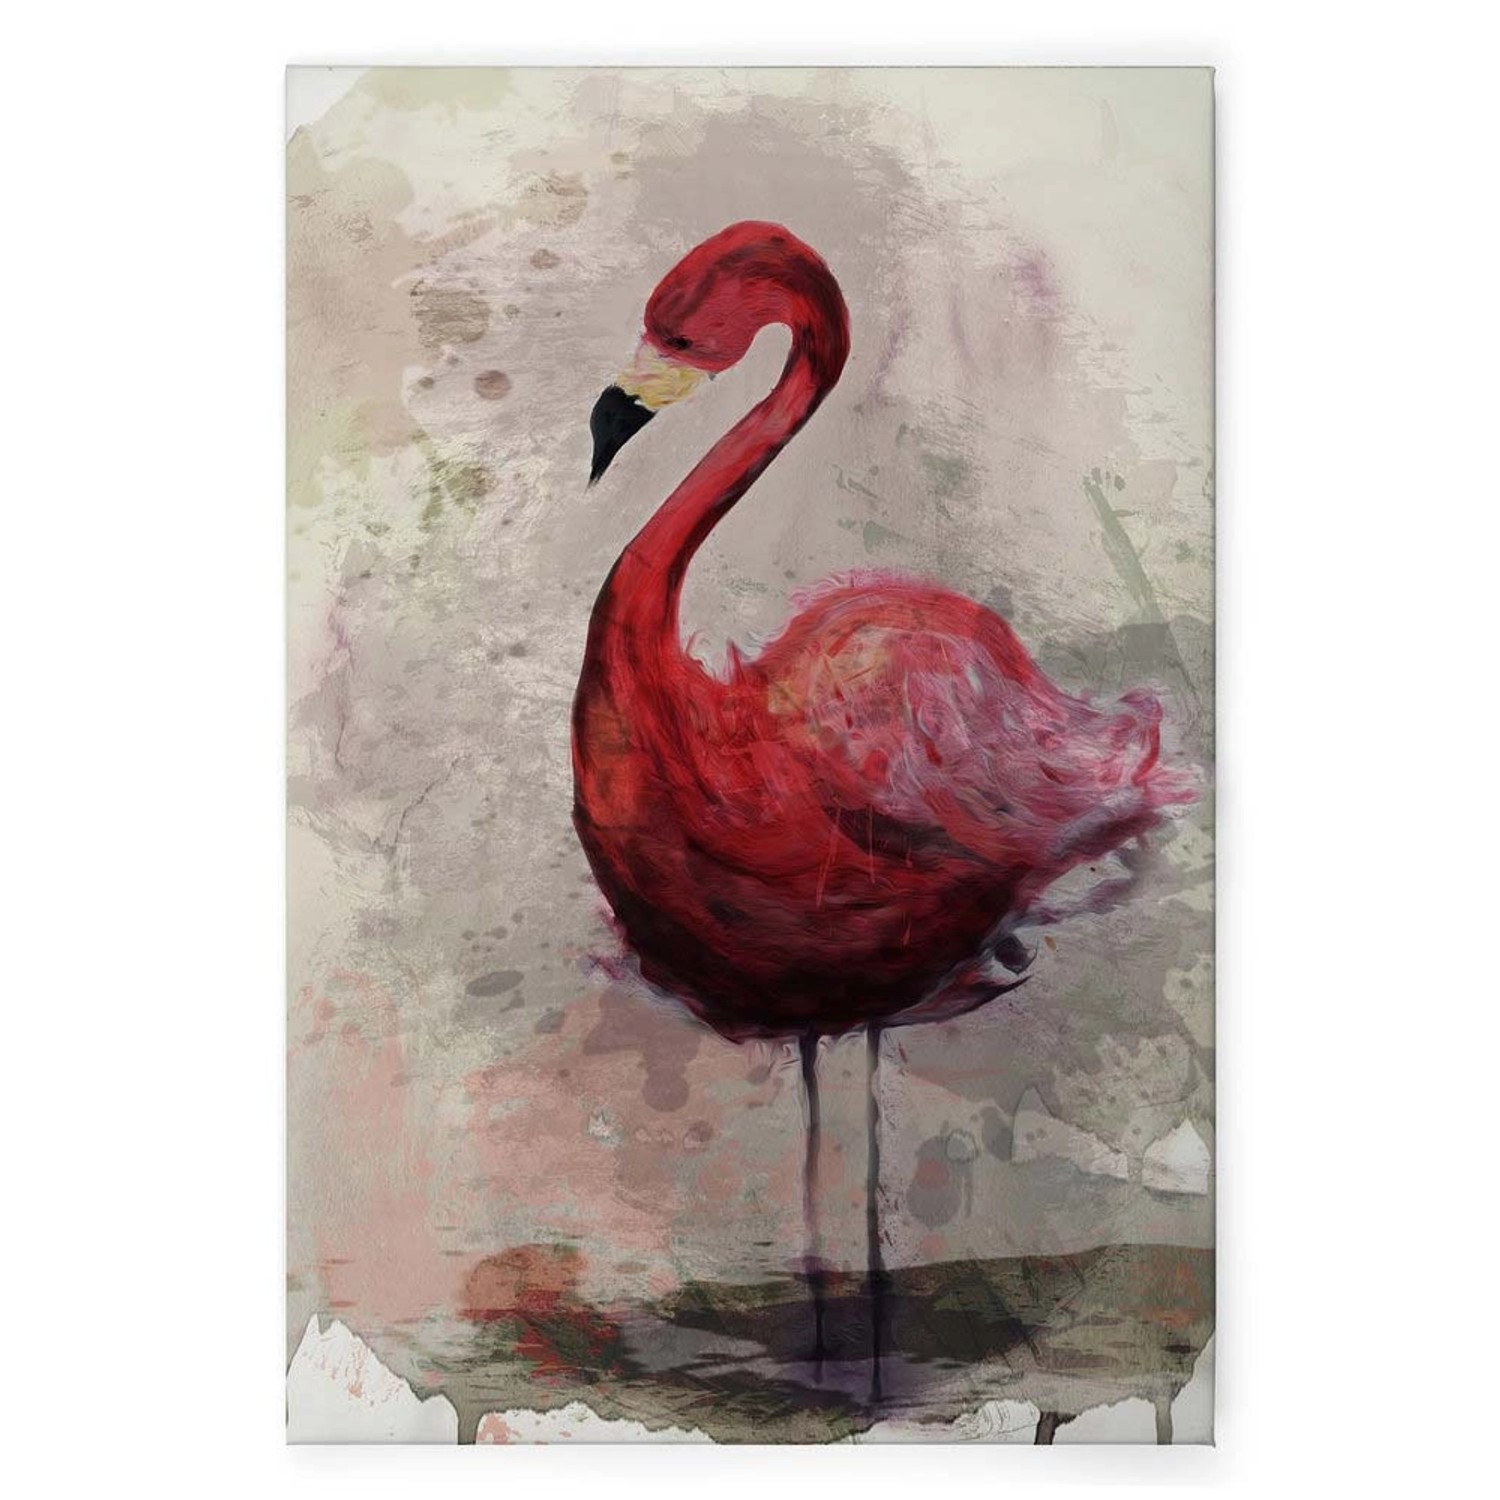 Bricoflor Bild Flamingo Auf Leinwand Pink Grau Kunst Wandbild Mit Vogel In Aquarell Optik Leinwandbild In 60 X 90 Cm Für